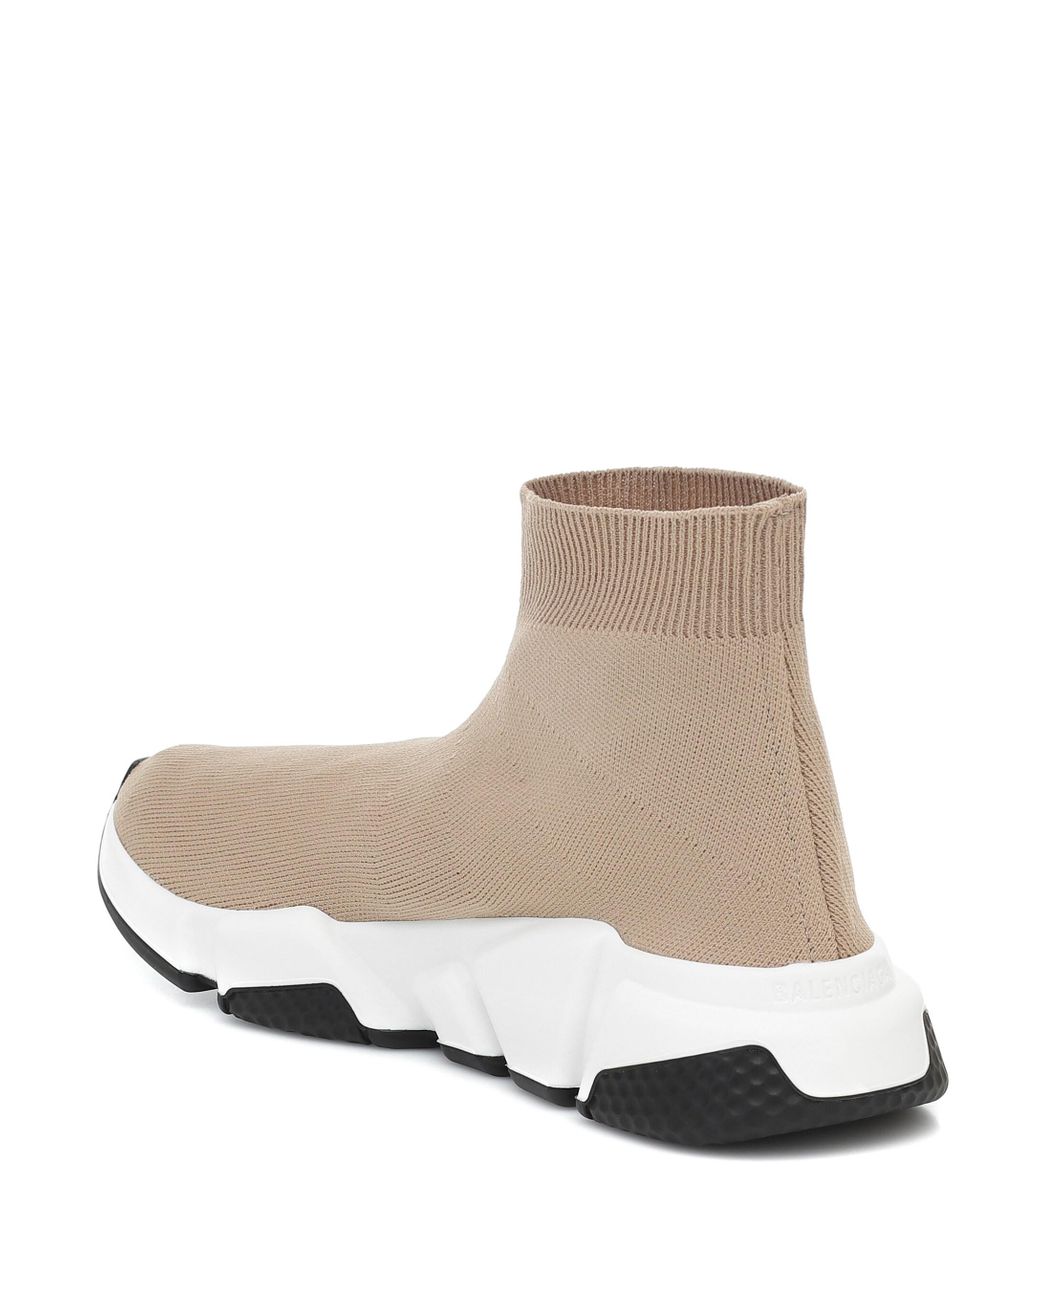 Balenciaga Speed Sneaker in Beige/White (Natural) | Lyst